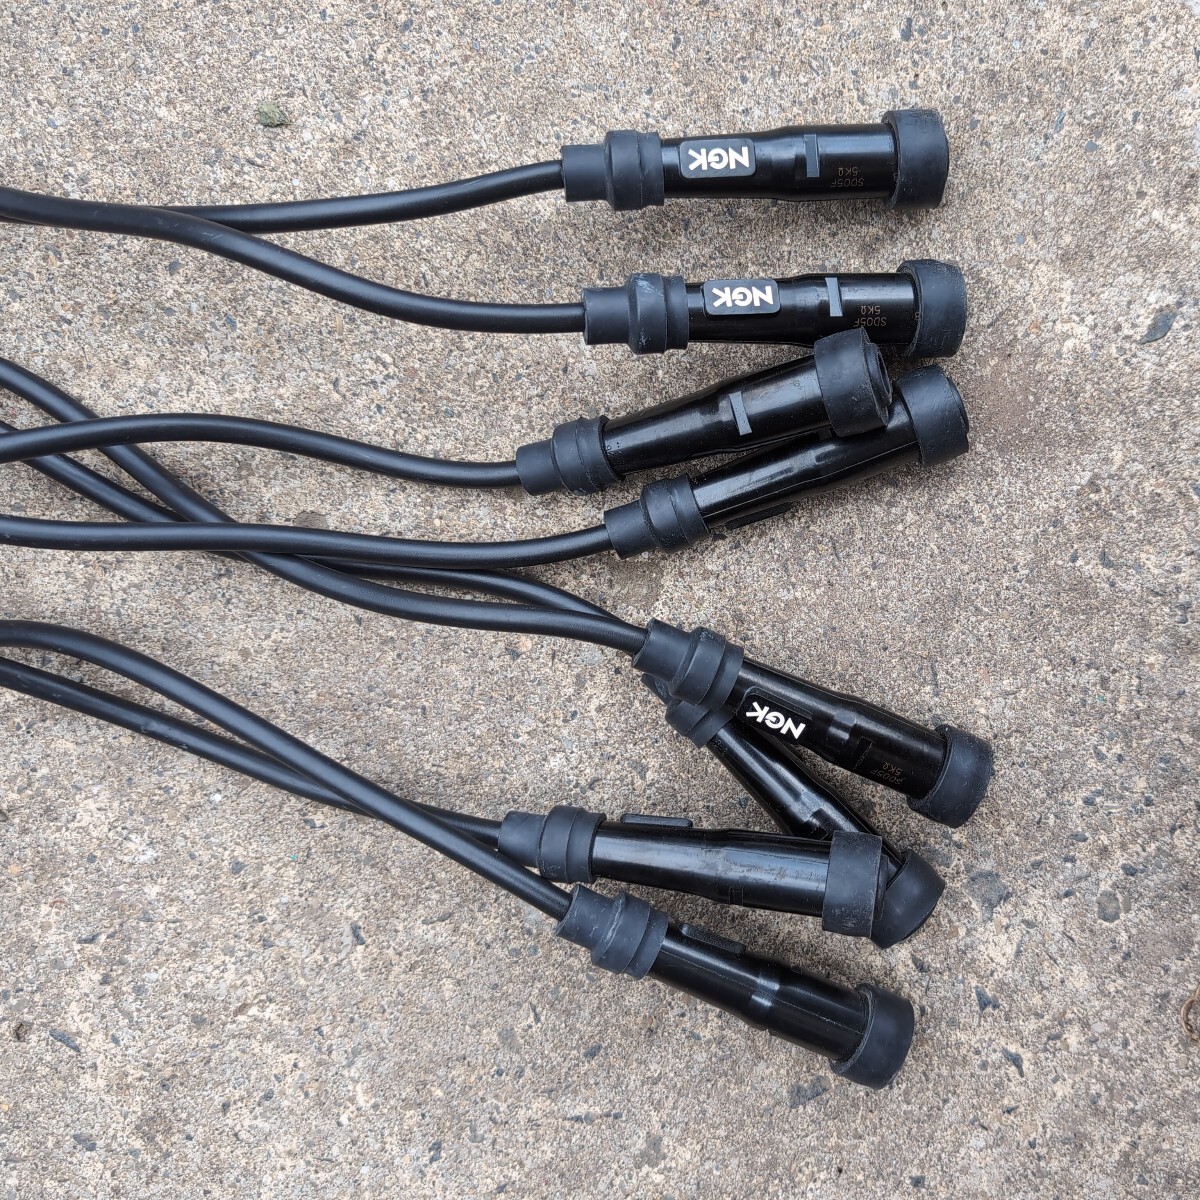  Zephyr 1100 plug cord new old goods NGK